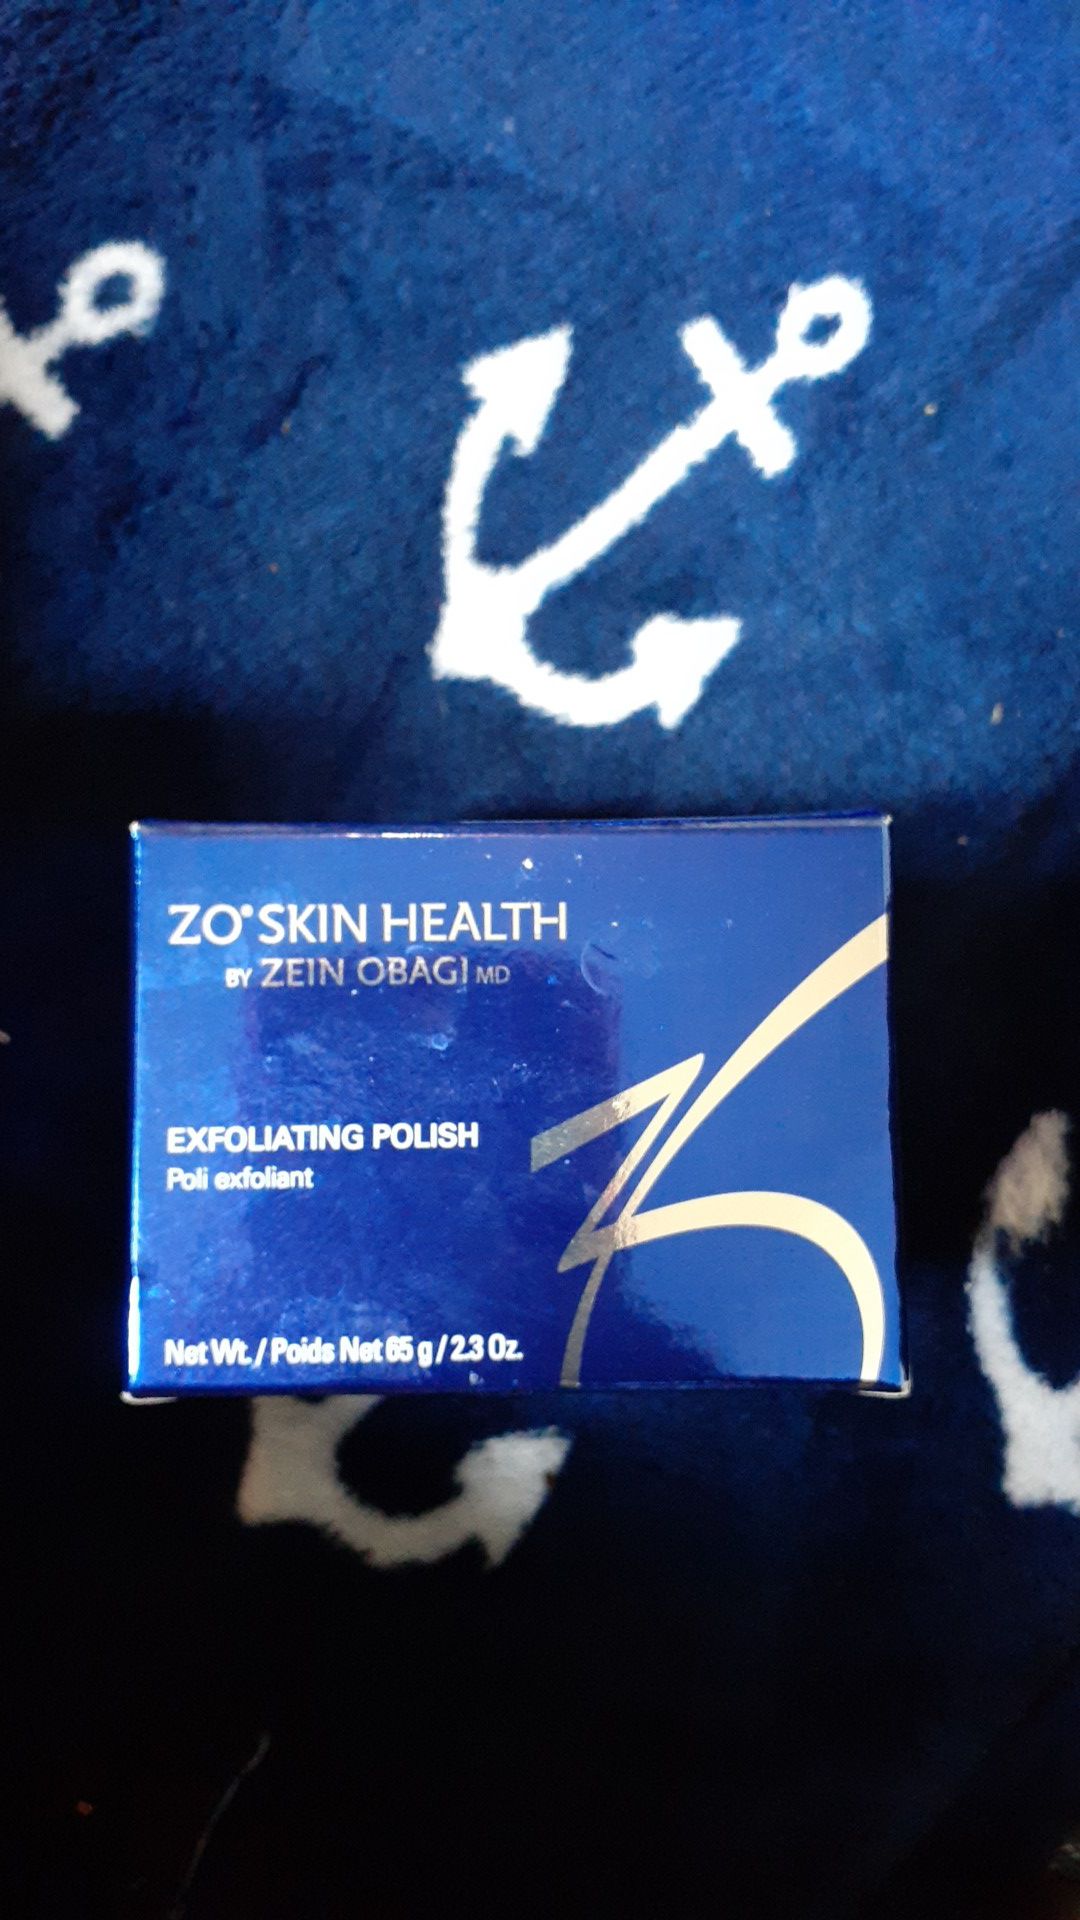 ZO SKIN HEALTH exfoliating polish